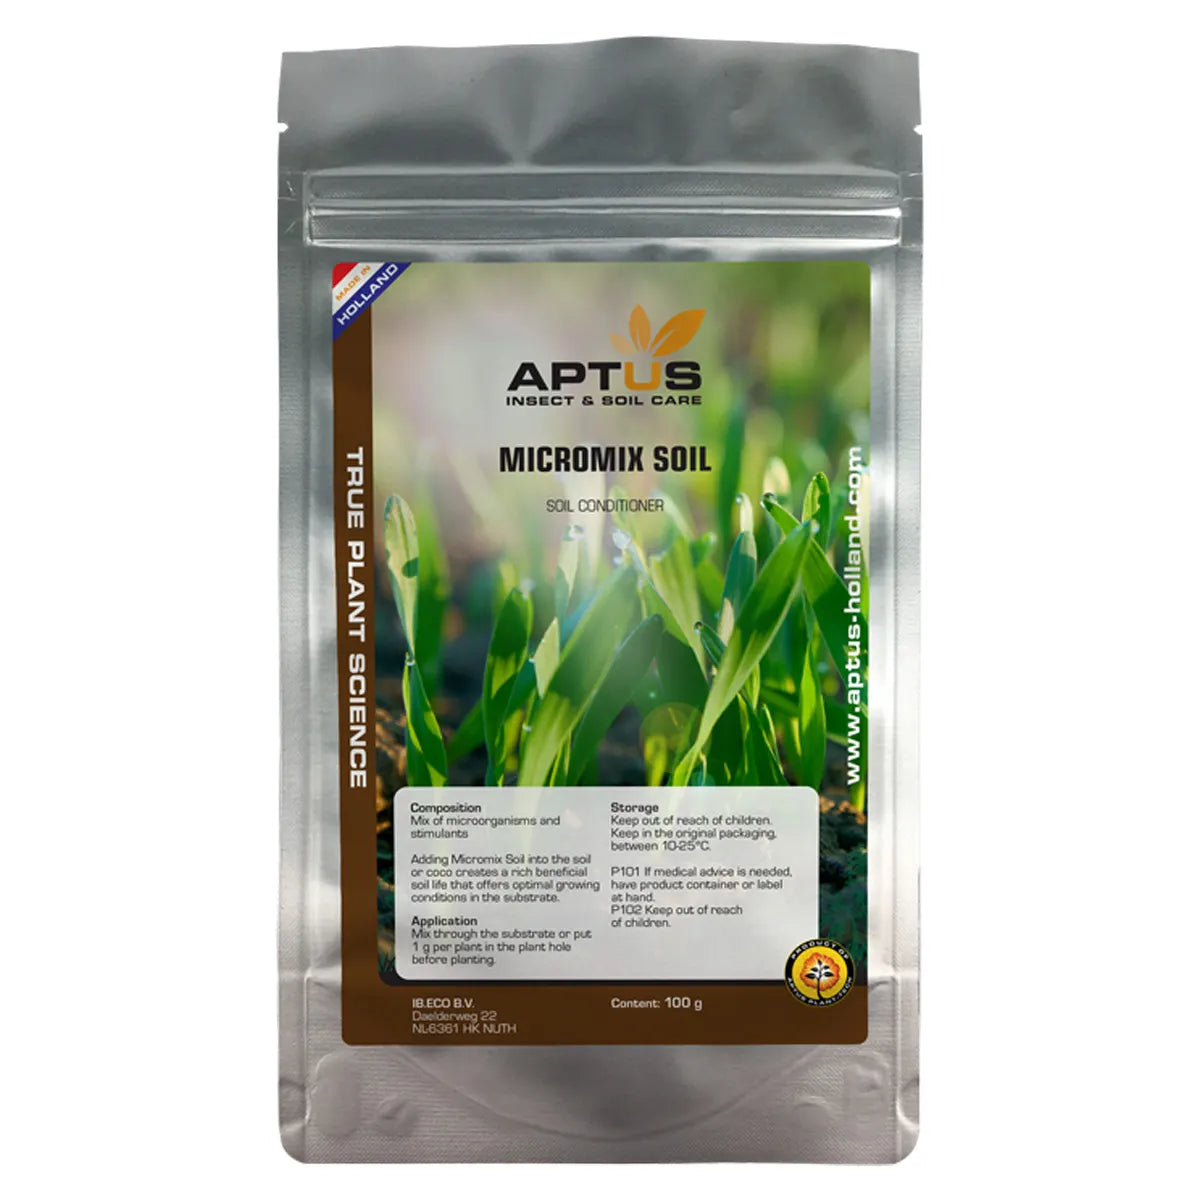 Aptus - Micromix Soil 100g